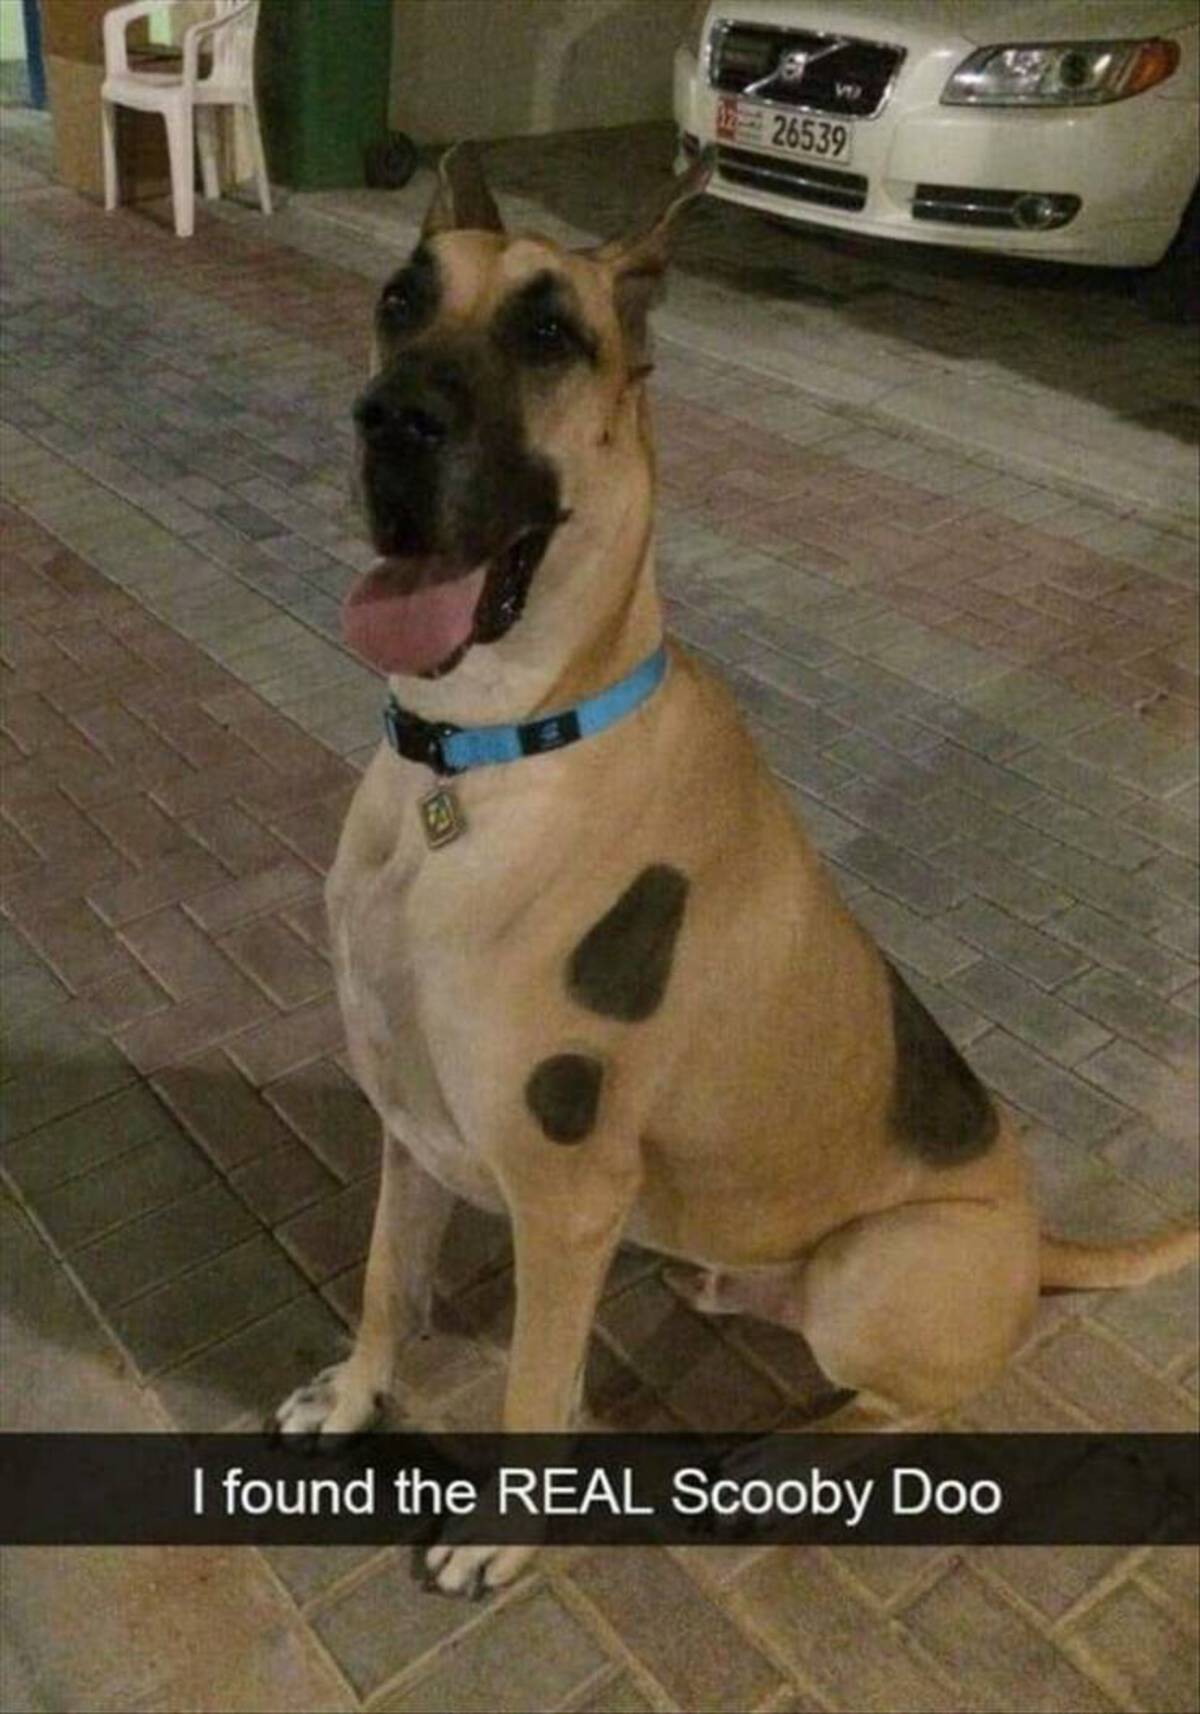 dog - Vi 226539 I found the Real Scooby Doo